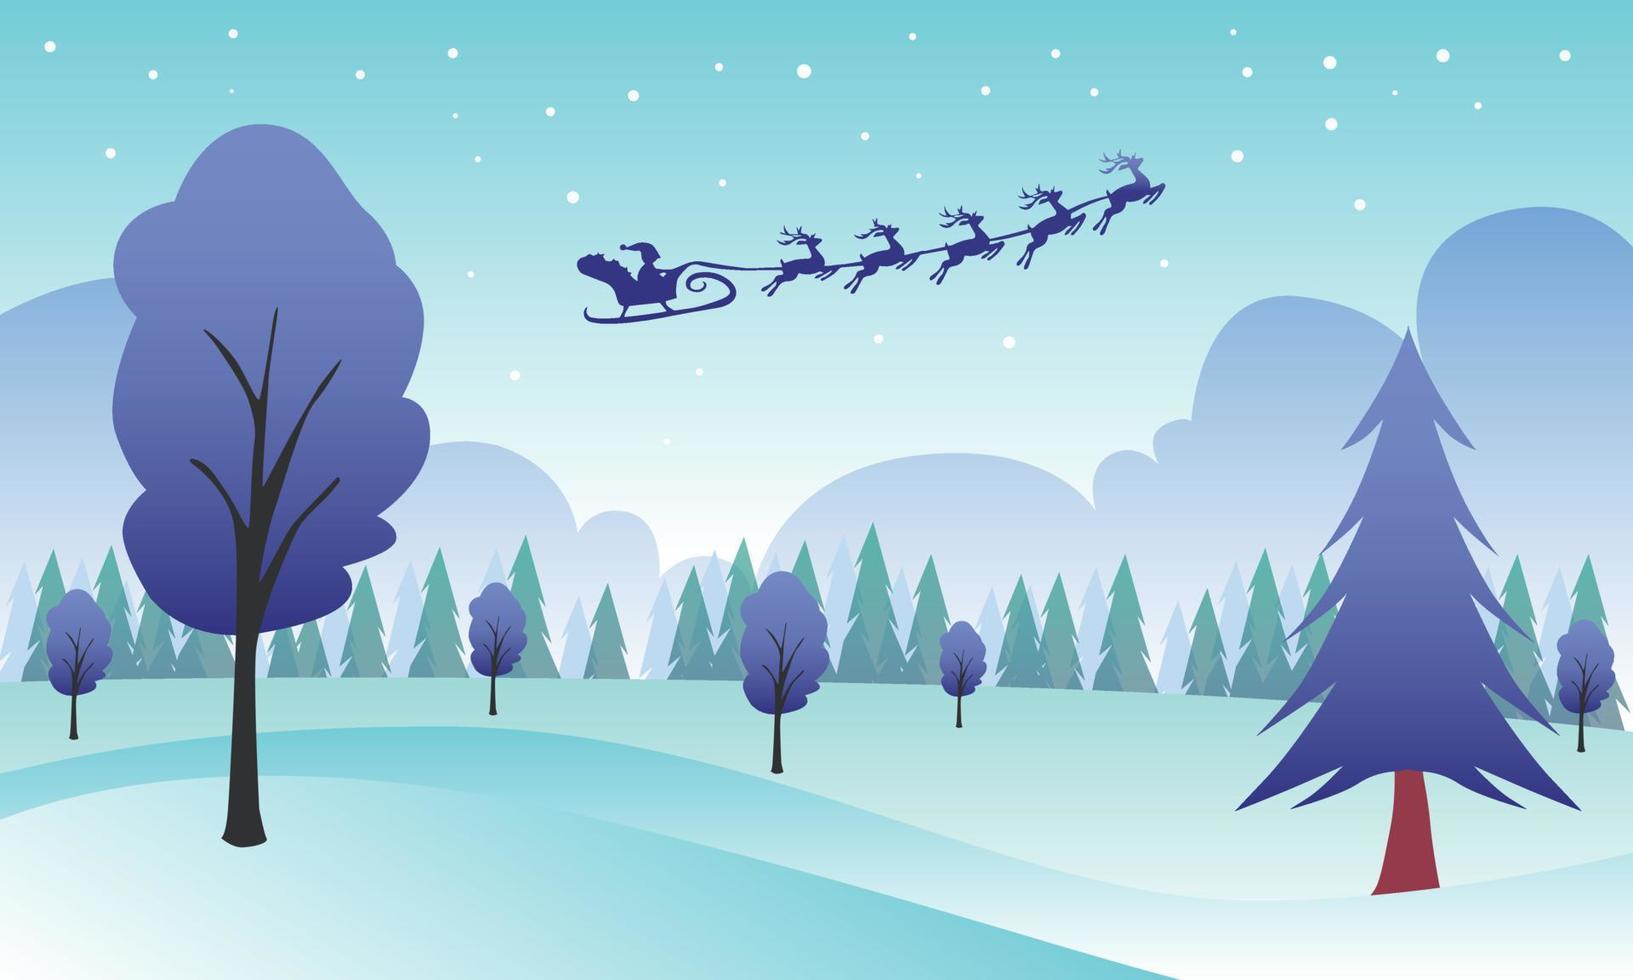 Christmas Landscape Background Illustration, Christmas Card Design. Christmas Scene in Winter Season vector